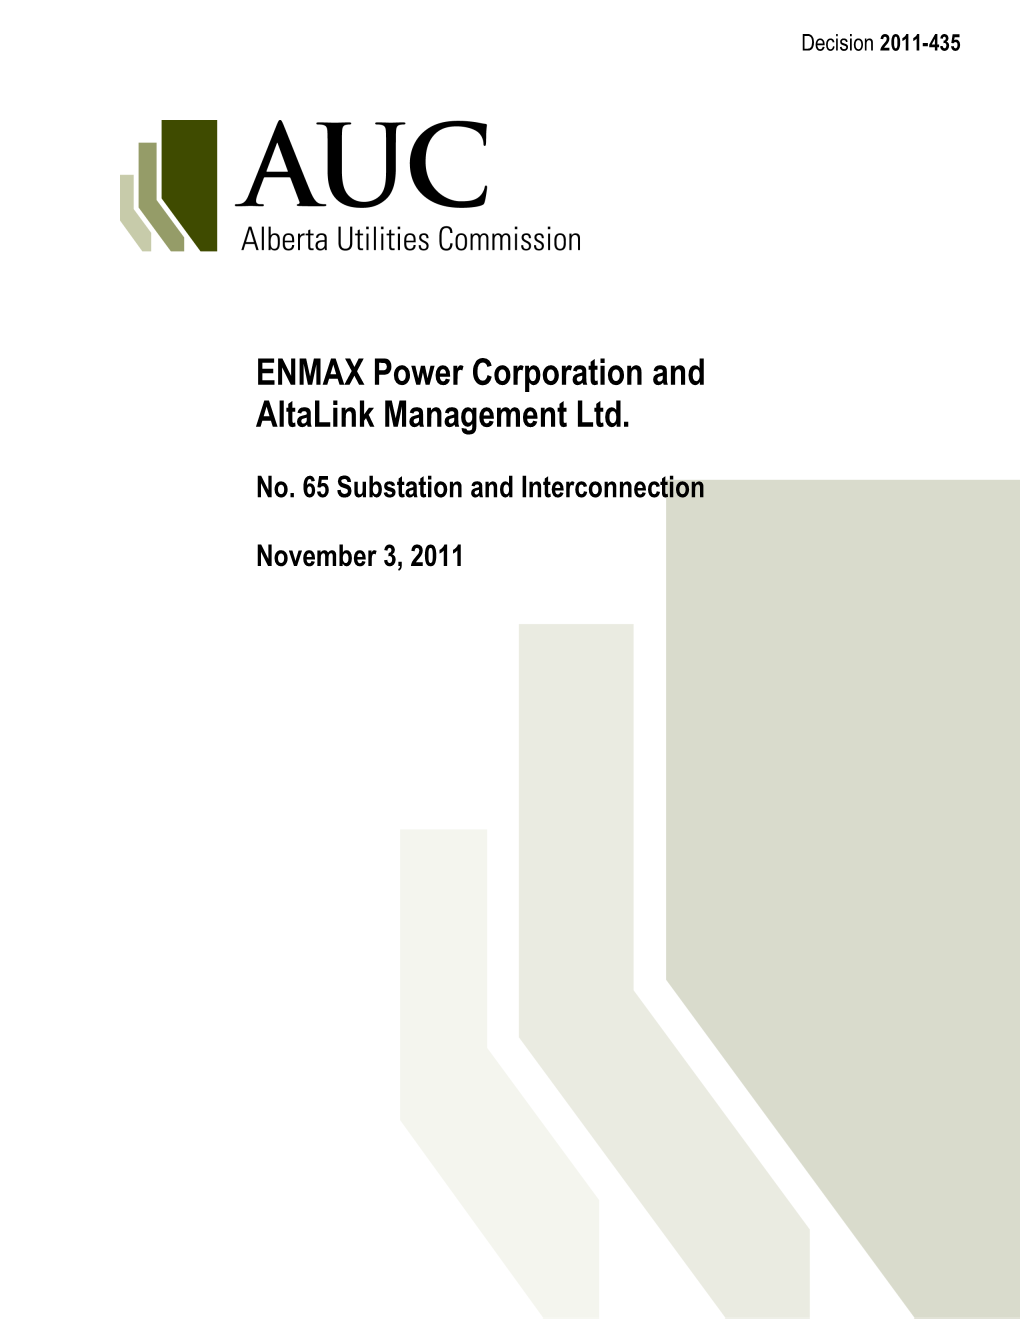 ENMAX Power Corporation and Altalink Management Ltd